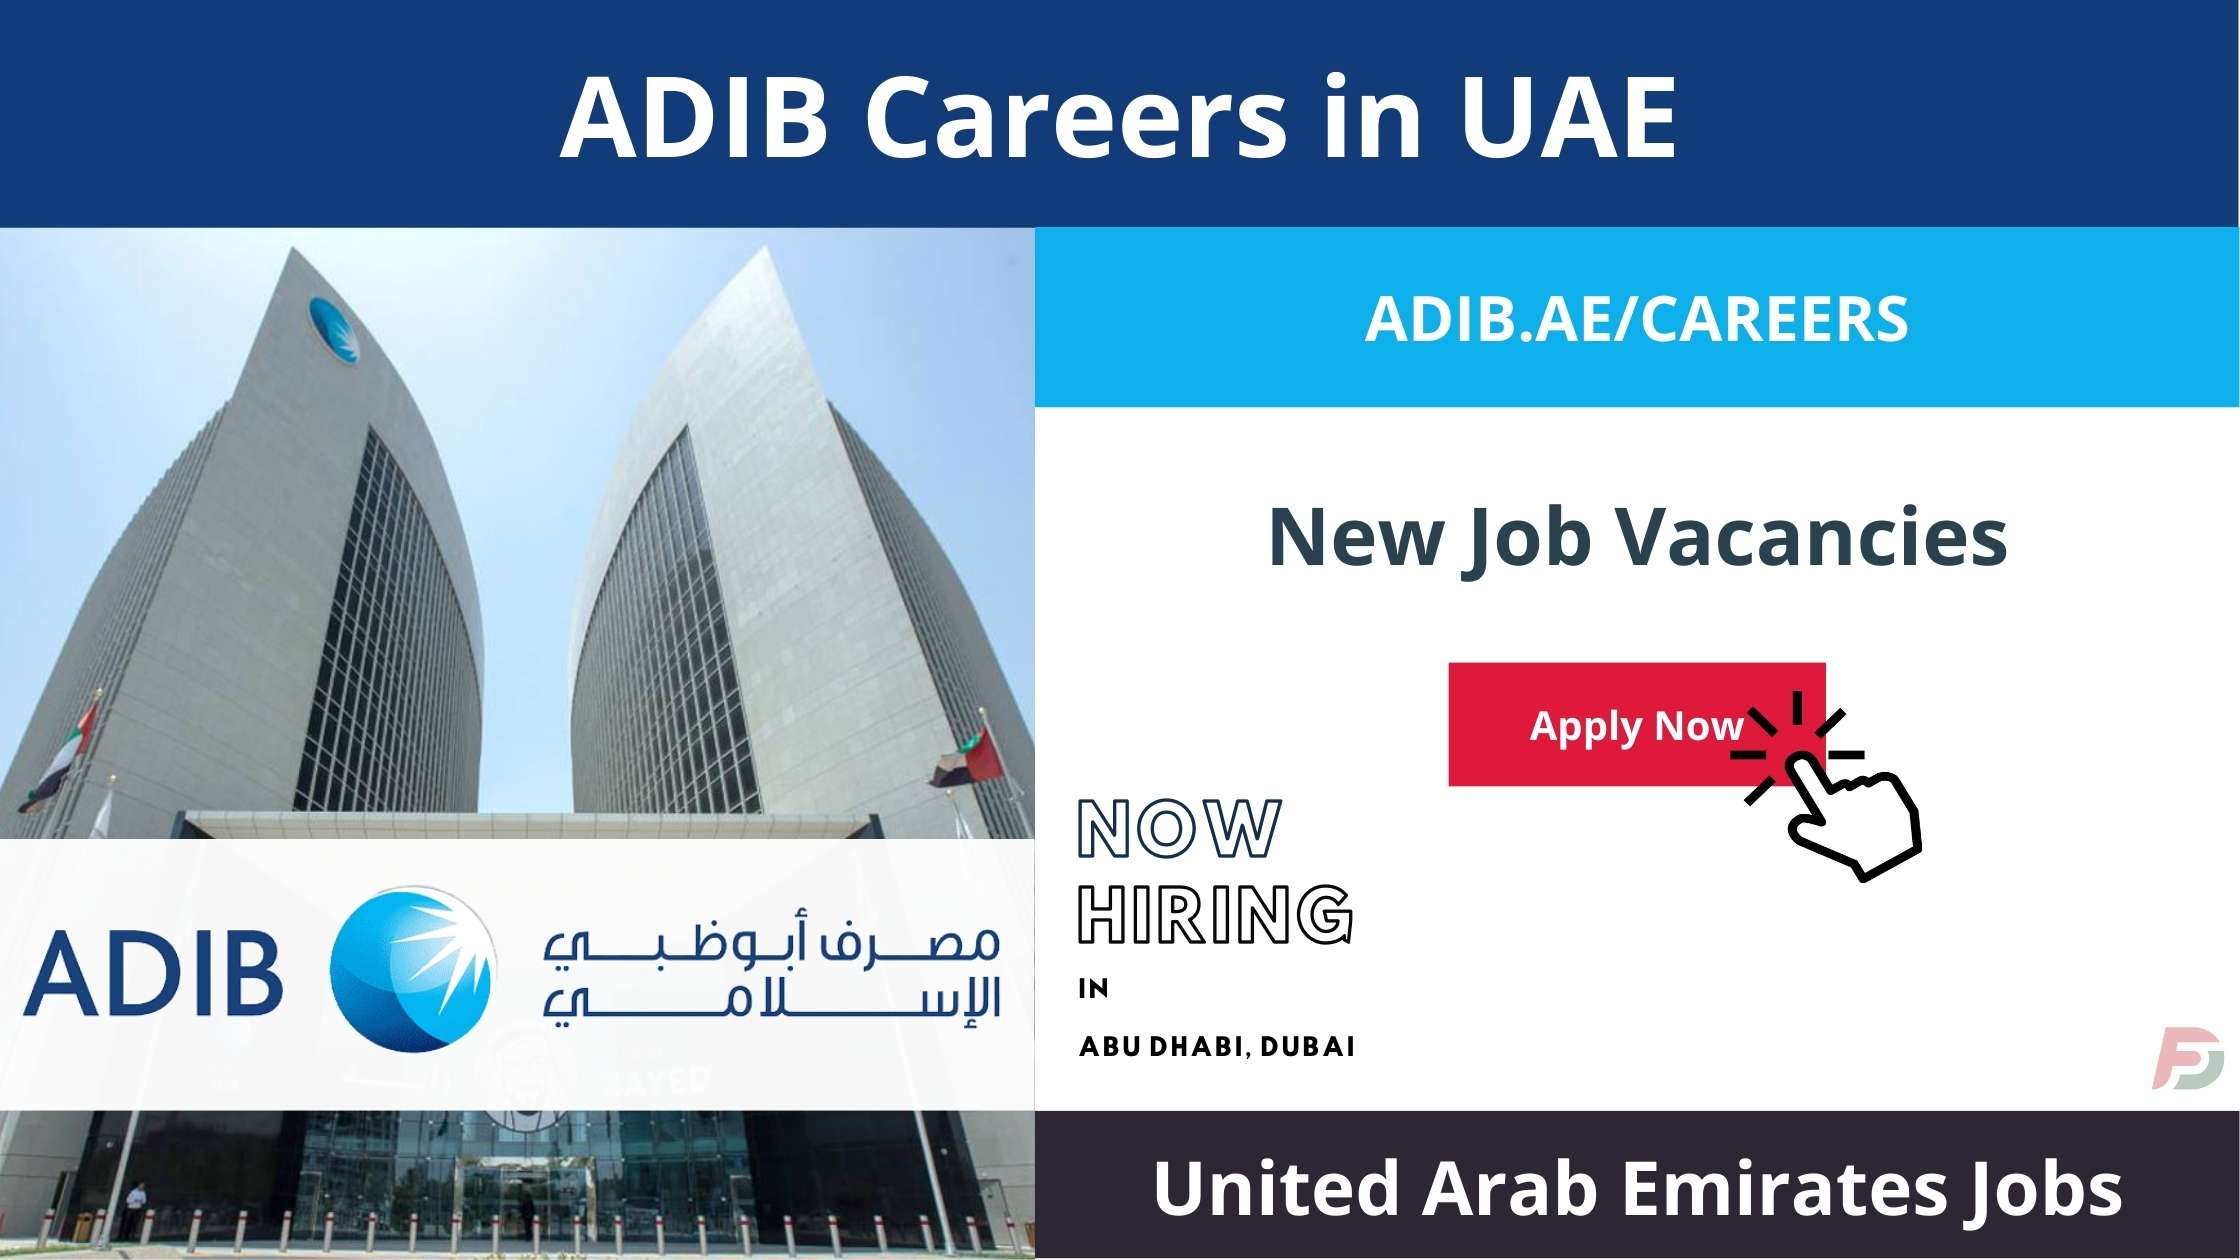 ADIB Careers in UAE